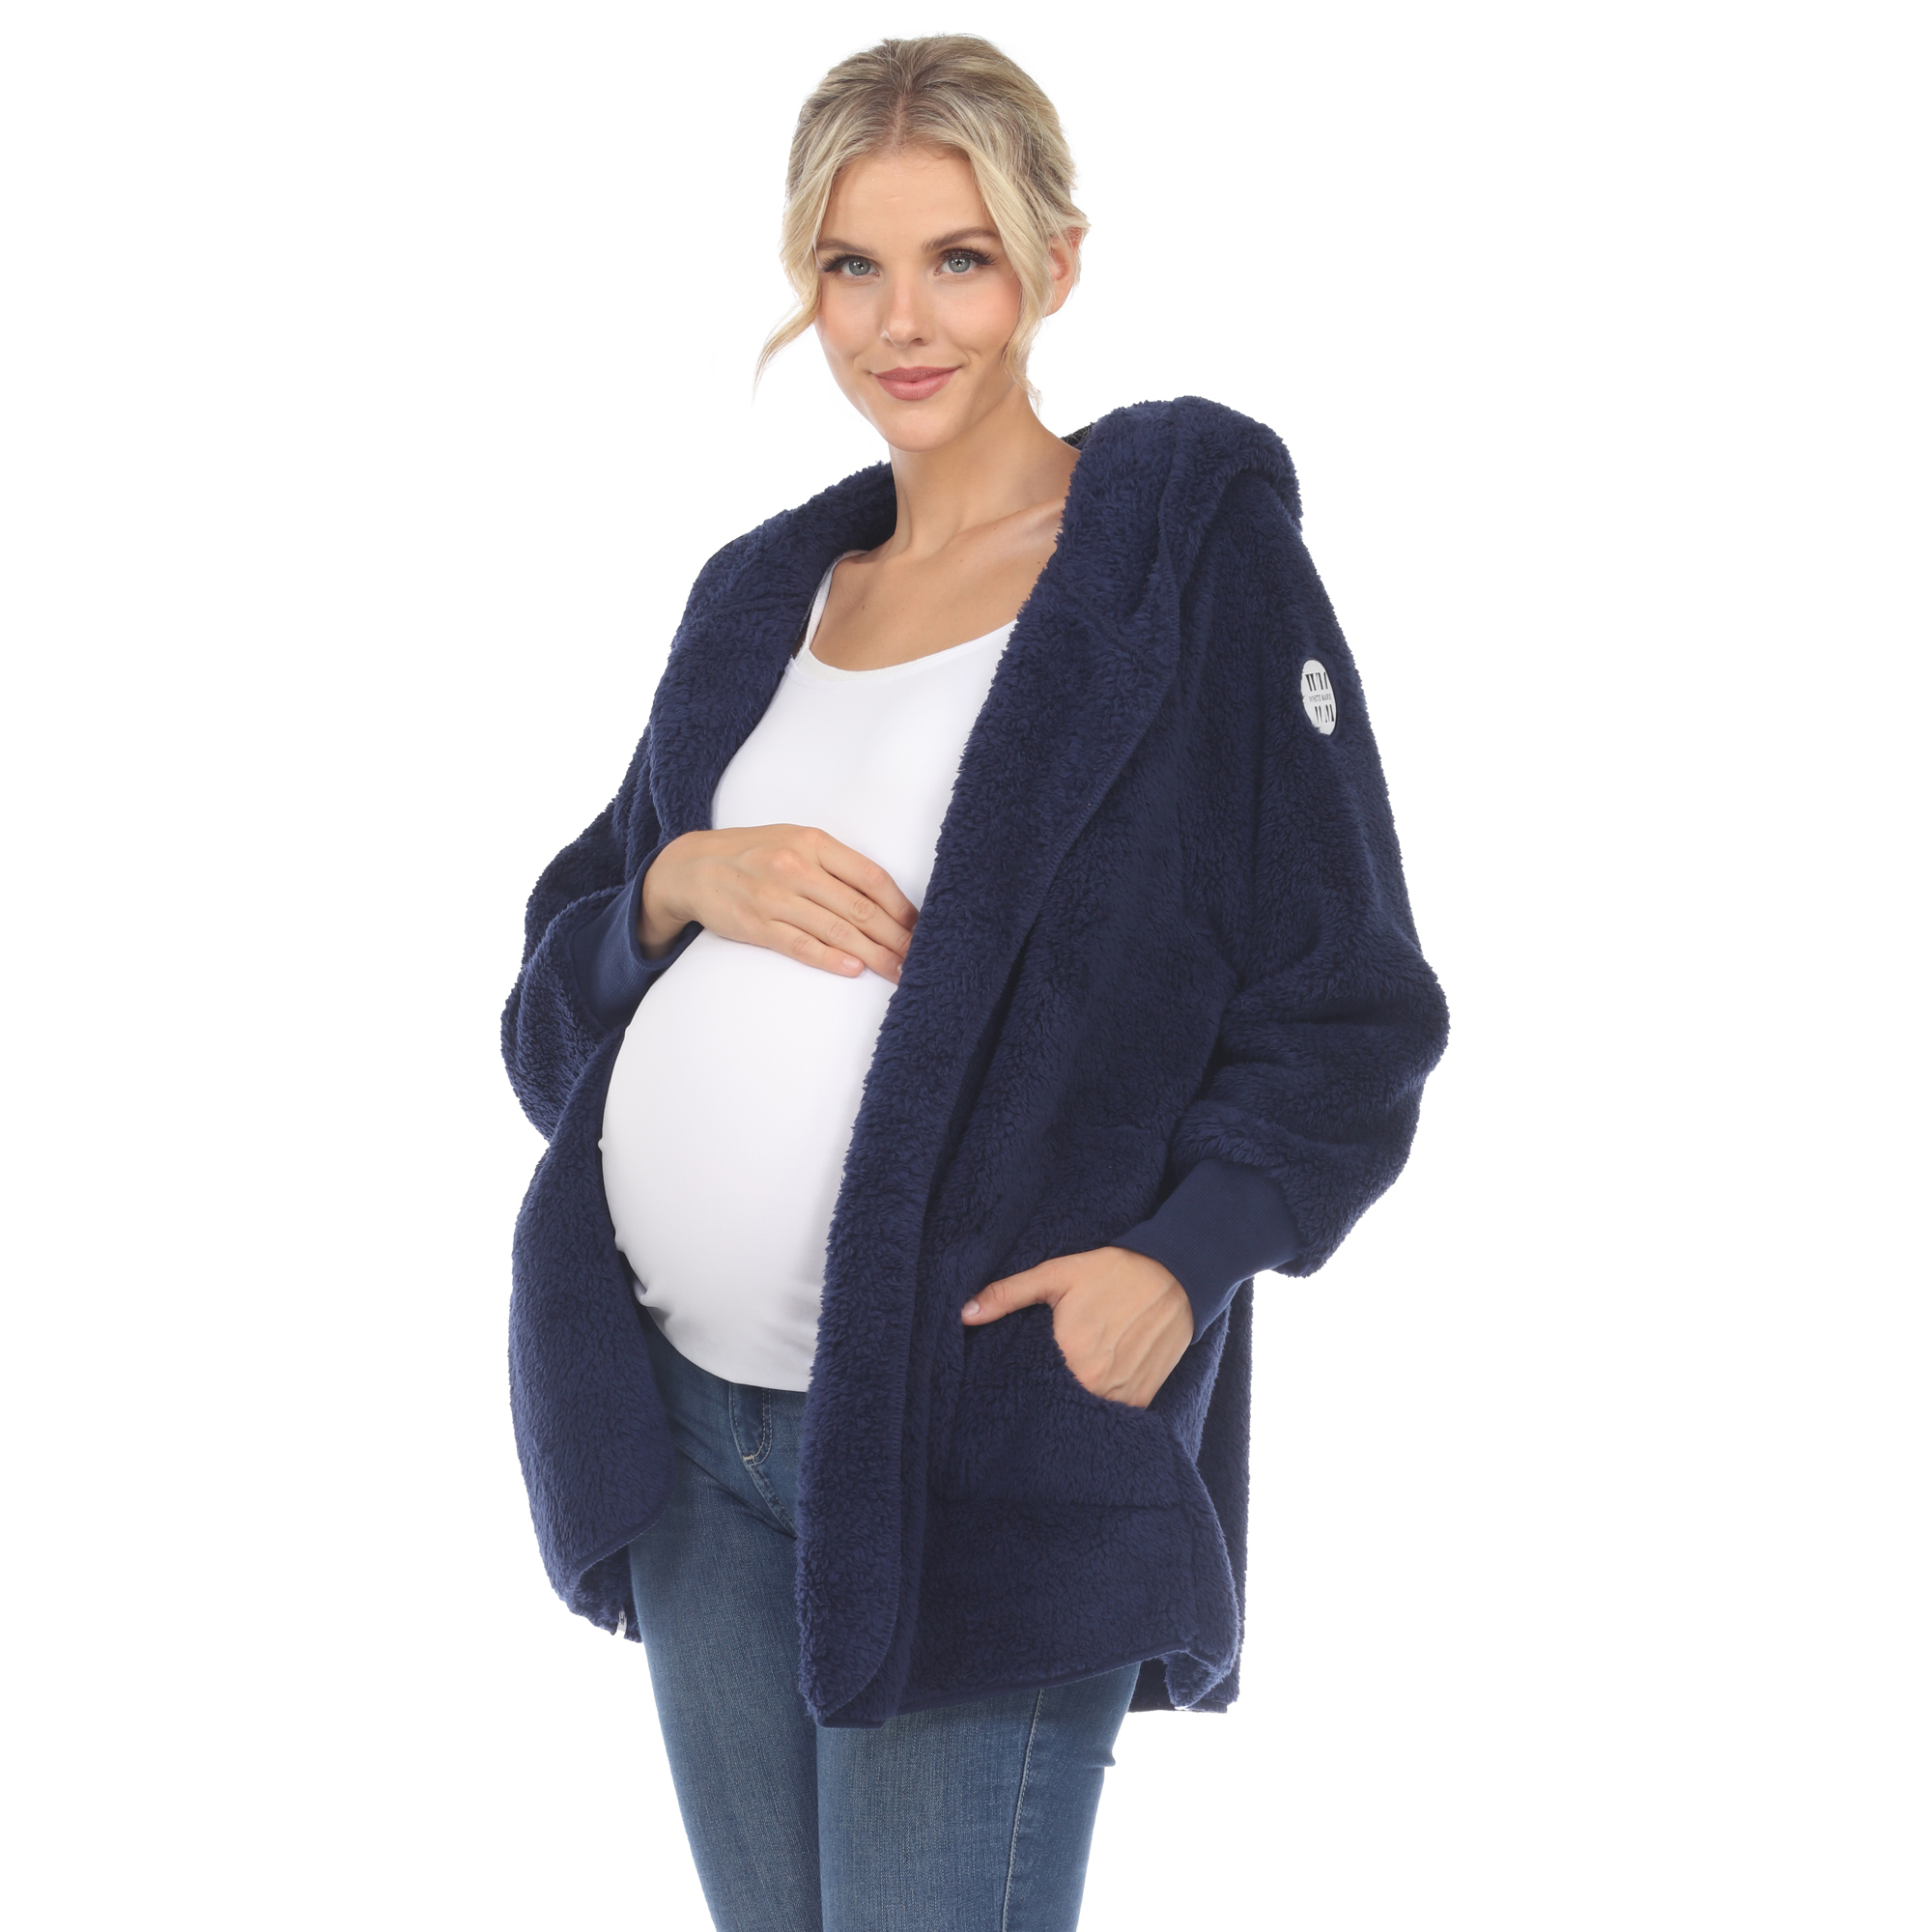 White Mark Womenâs Maternity Plush Hooded Cardigan With Pockets - Navy, 1X/2X